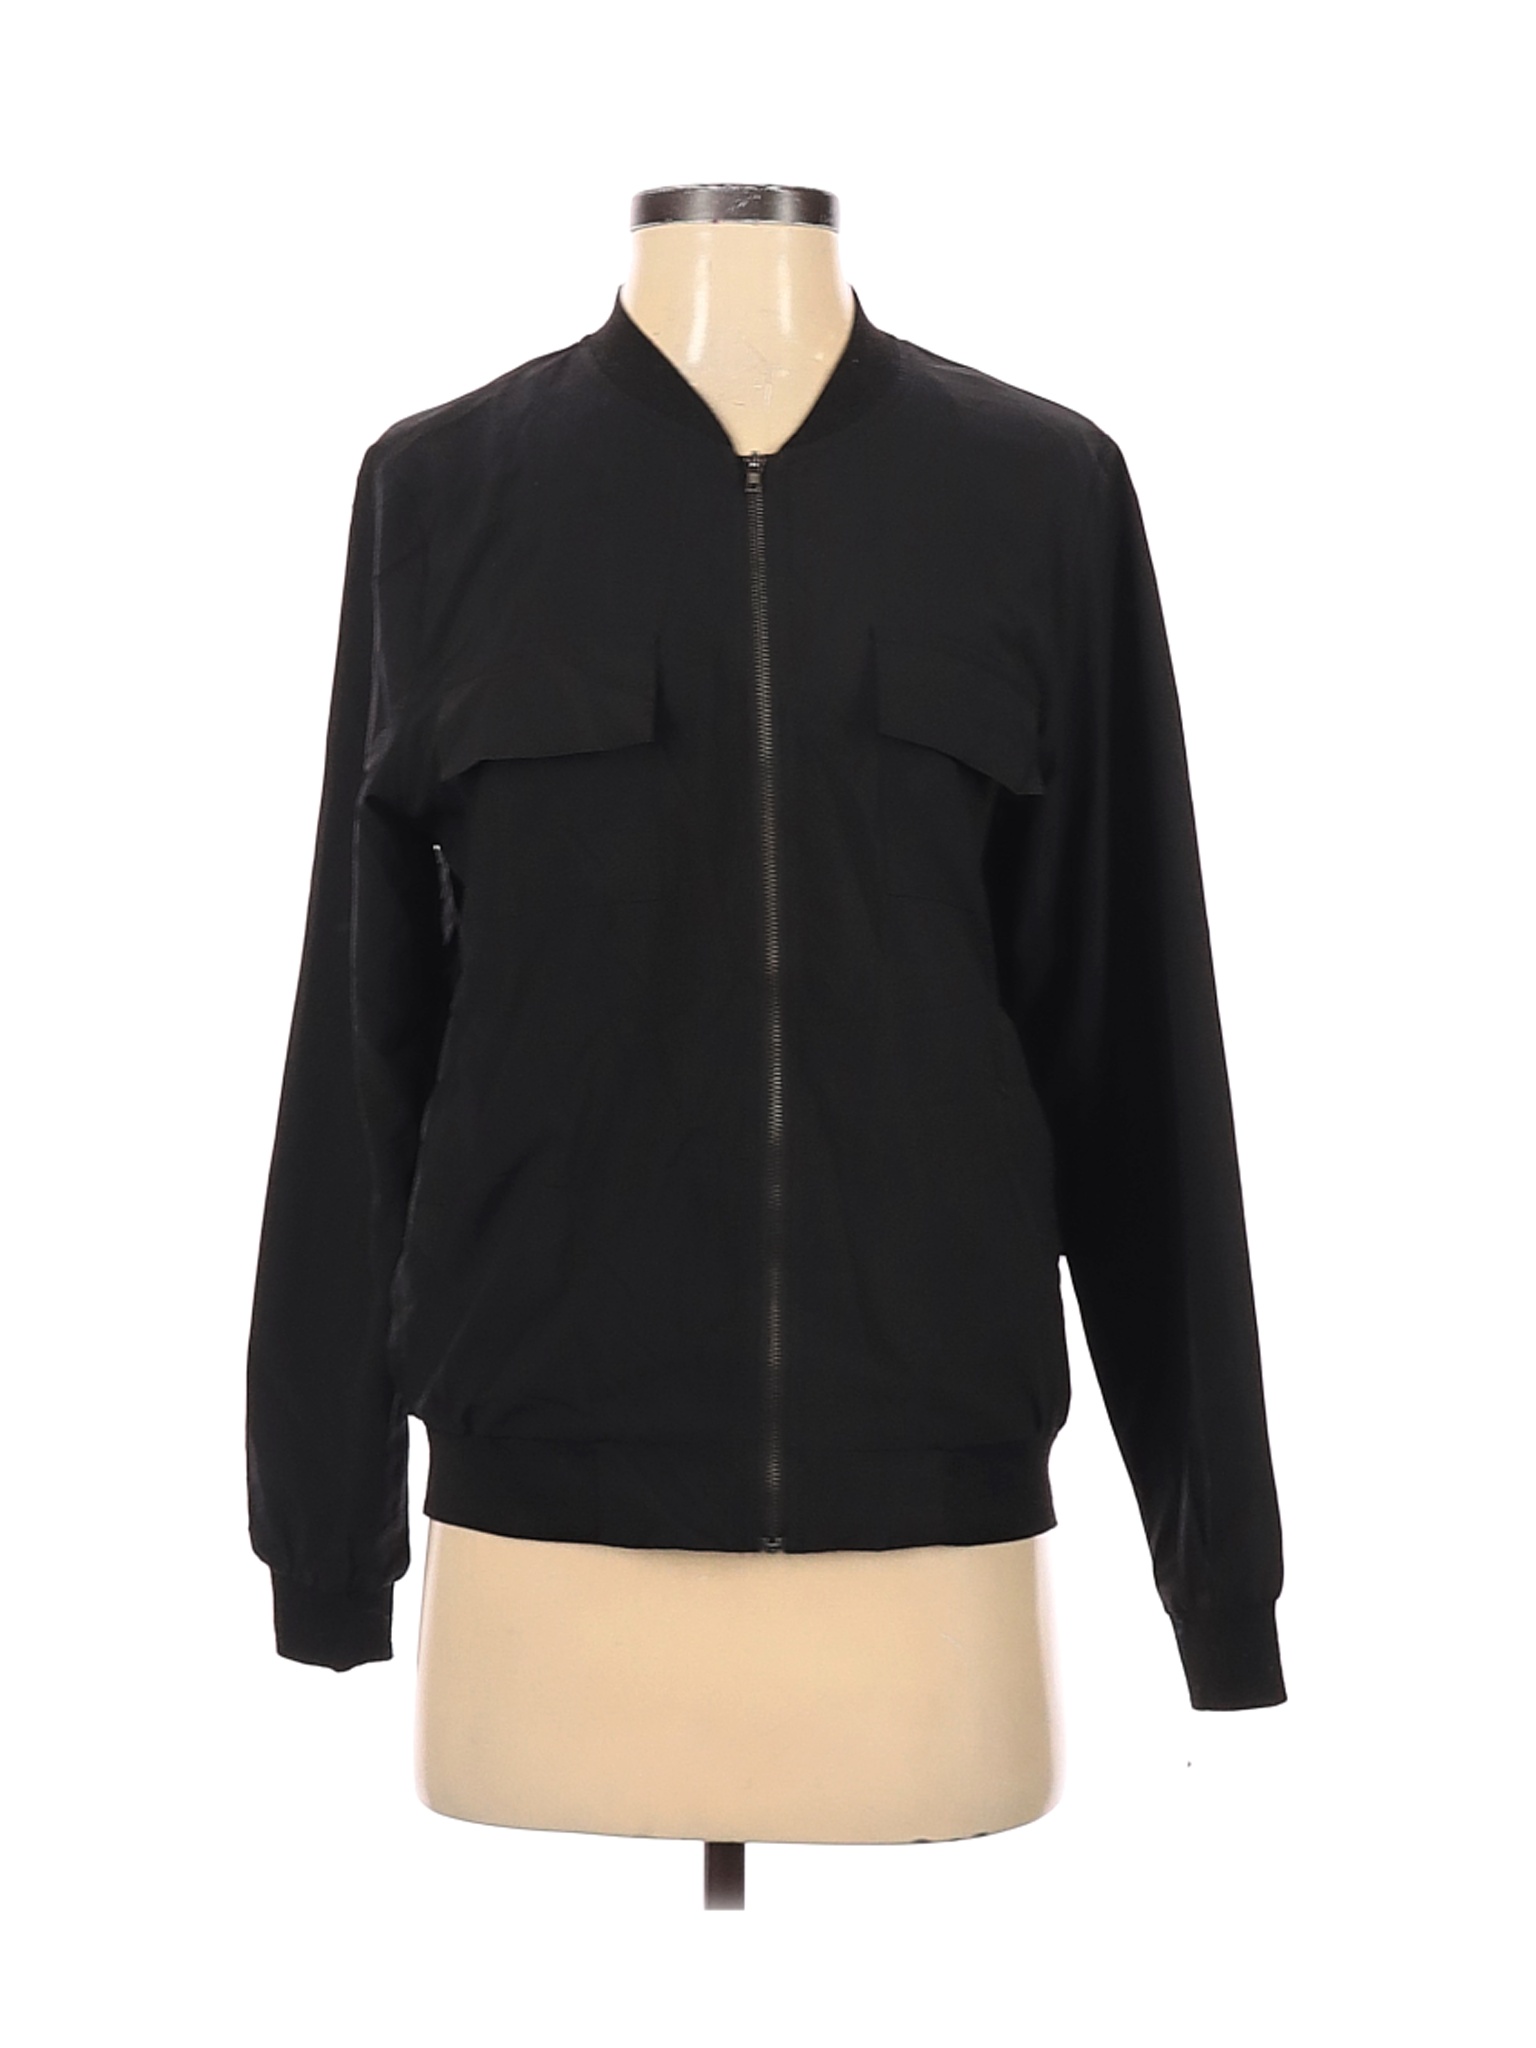 Unbranded Women Black Jacket S | eBay